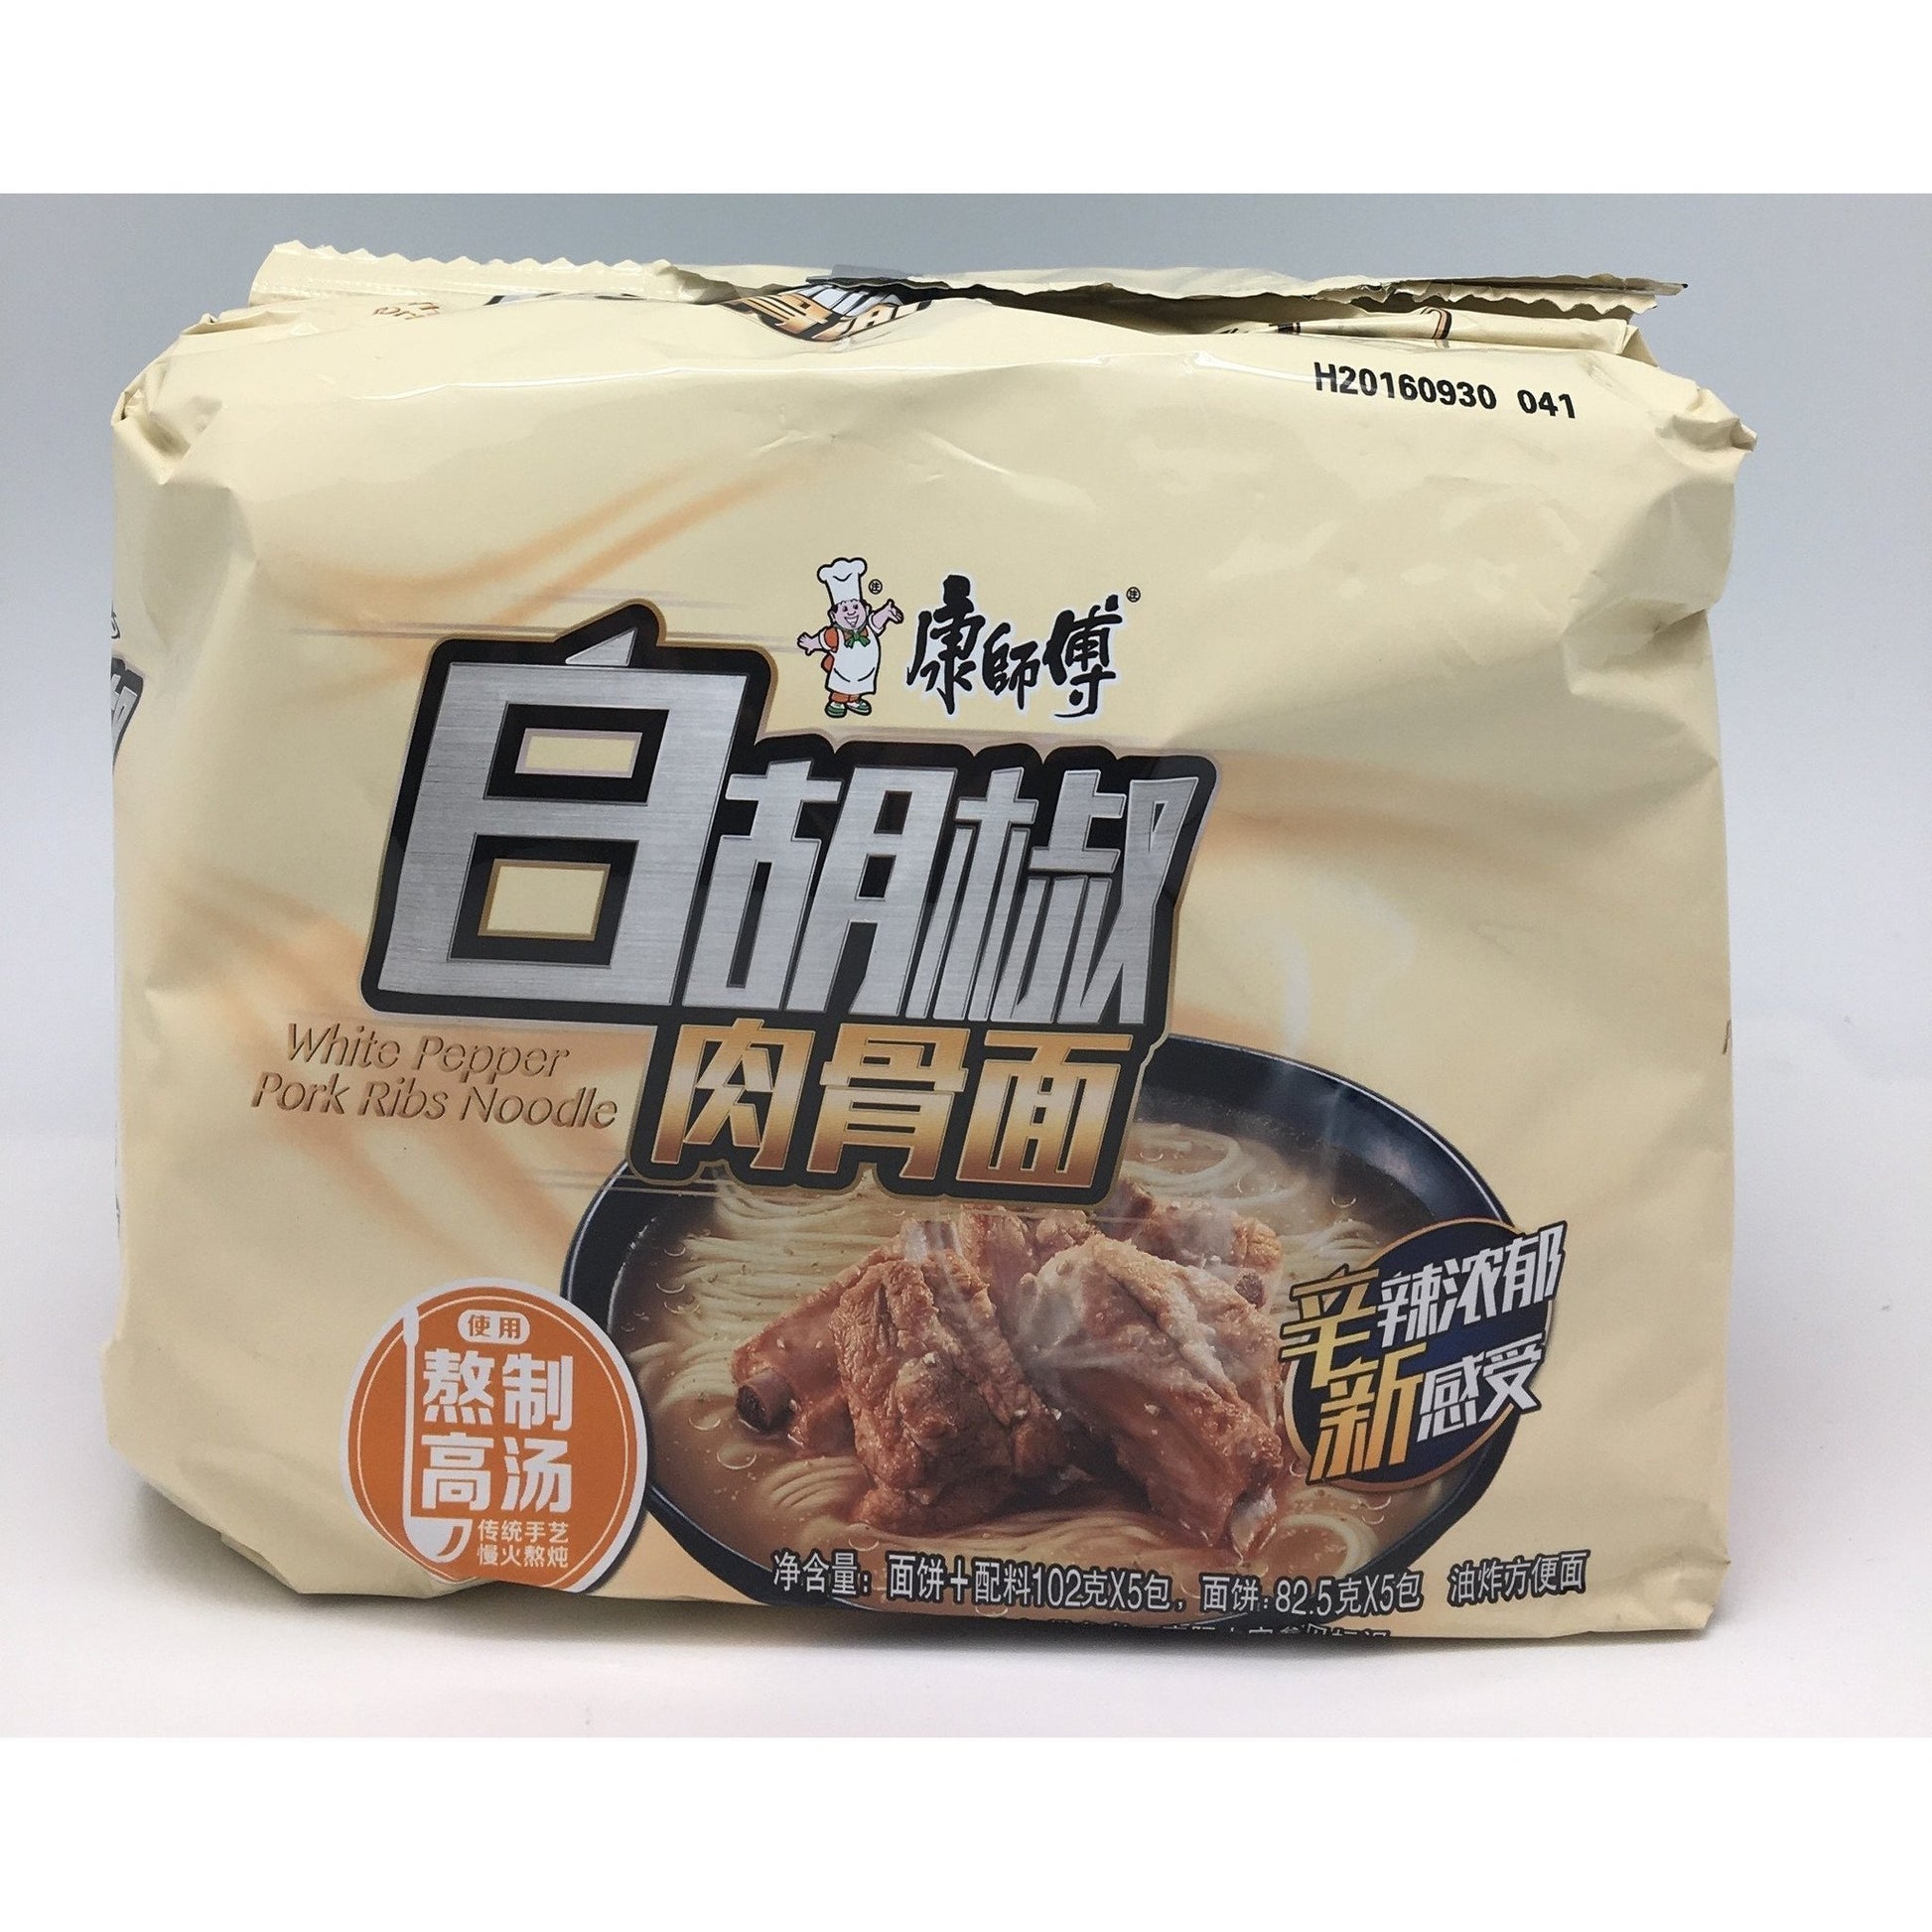 N002CD Kon Brand - Instant Ramen Noodle X 5pk - 30pkt  /1CTN - New Eastland Pty Ltd - Asian food wholesalers